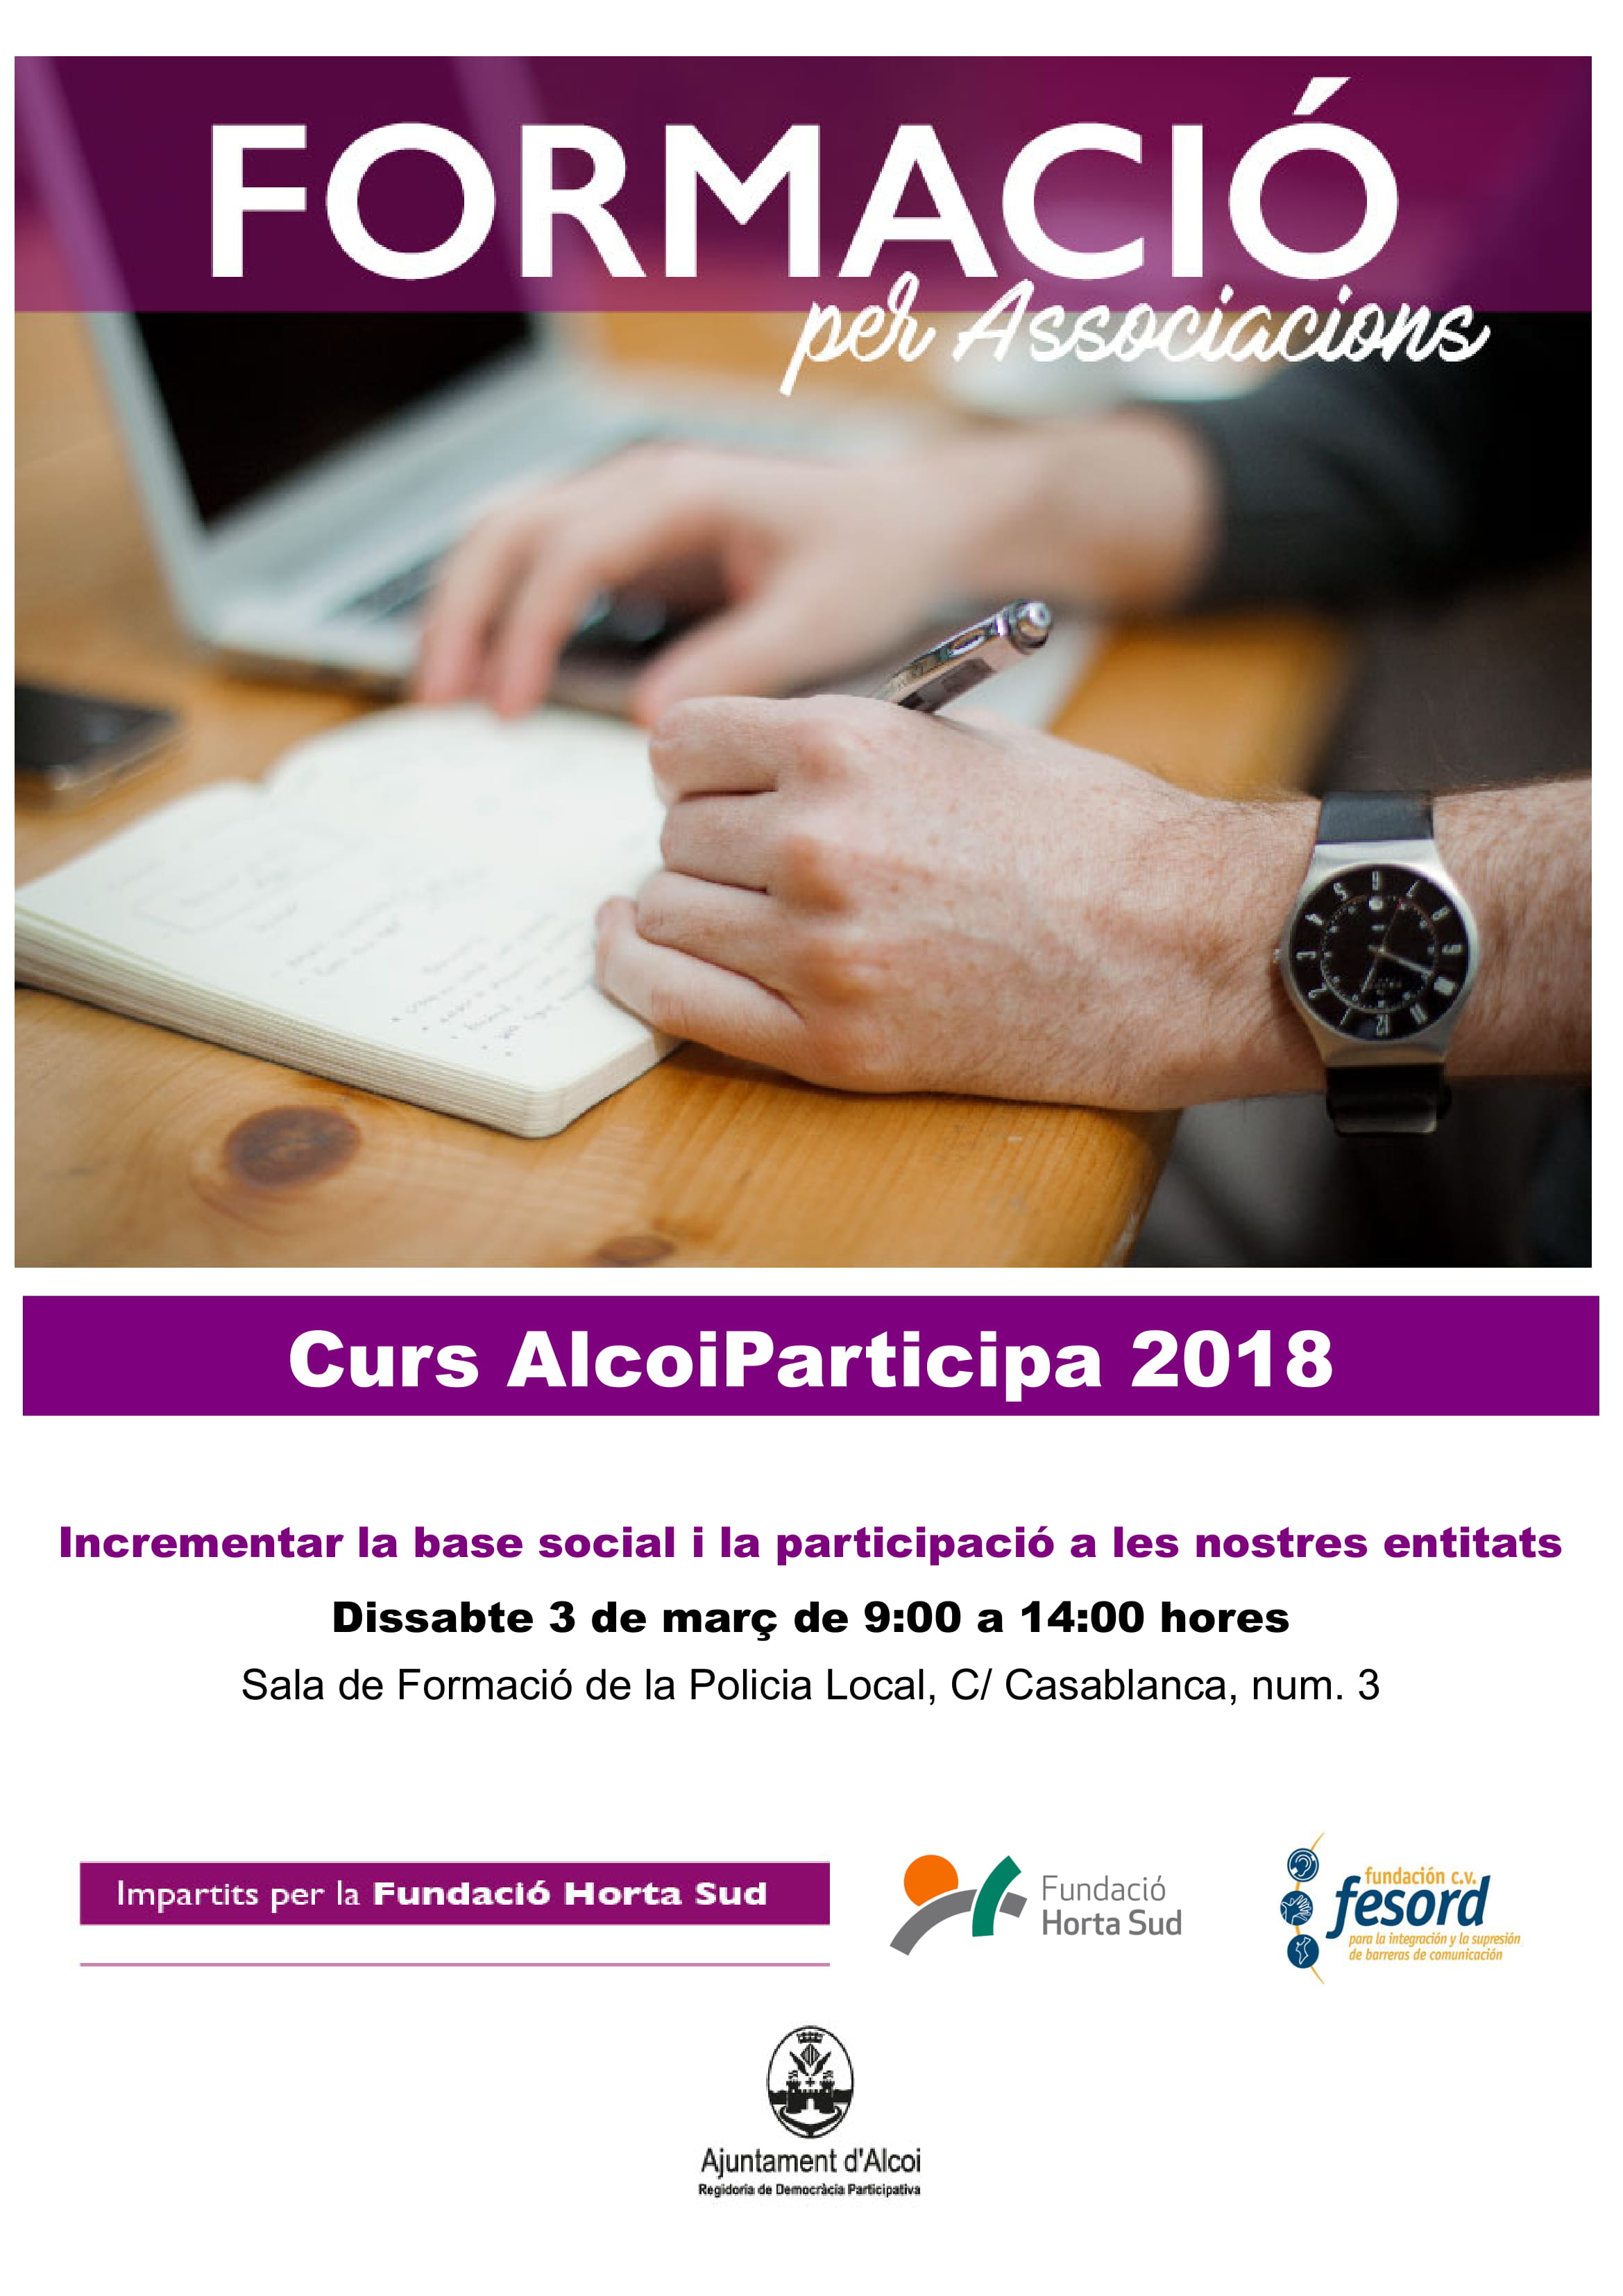 Cursos AlcoiParticipa 2018 para Asociaciones (descripción detallada a continuación).